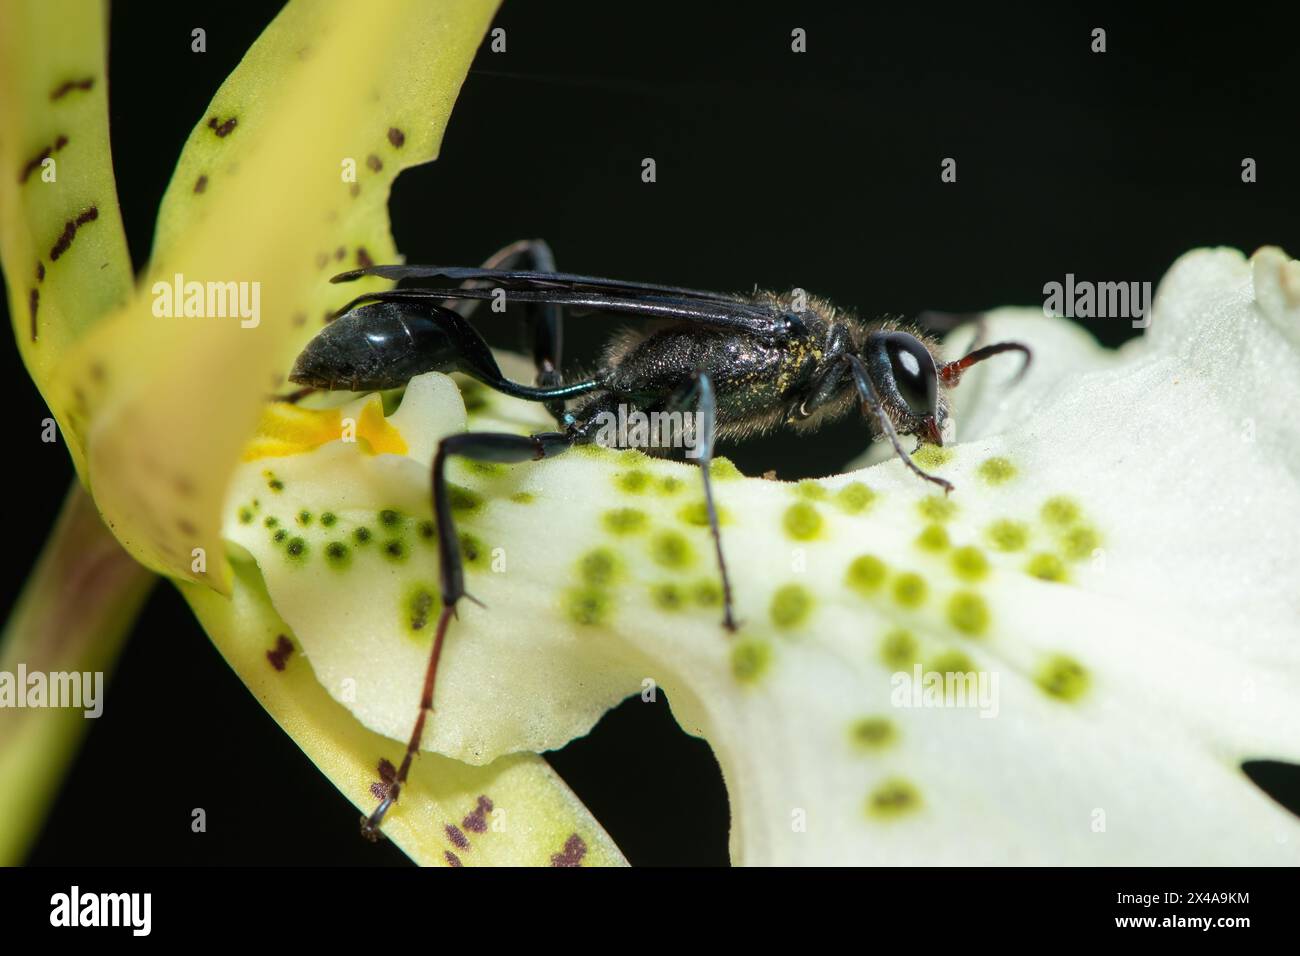 Blue Mud-dauber Wasp (Chalybion) pollinating a brassia flower Stock Photo